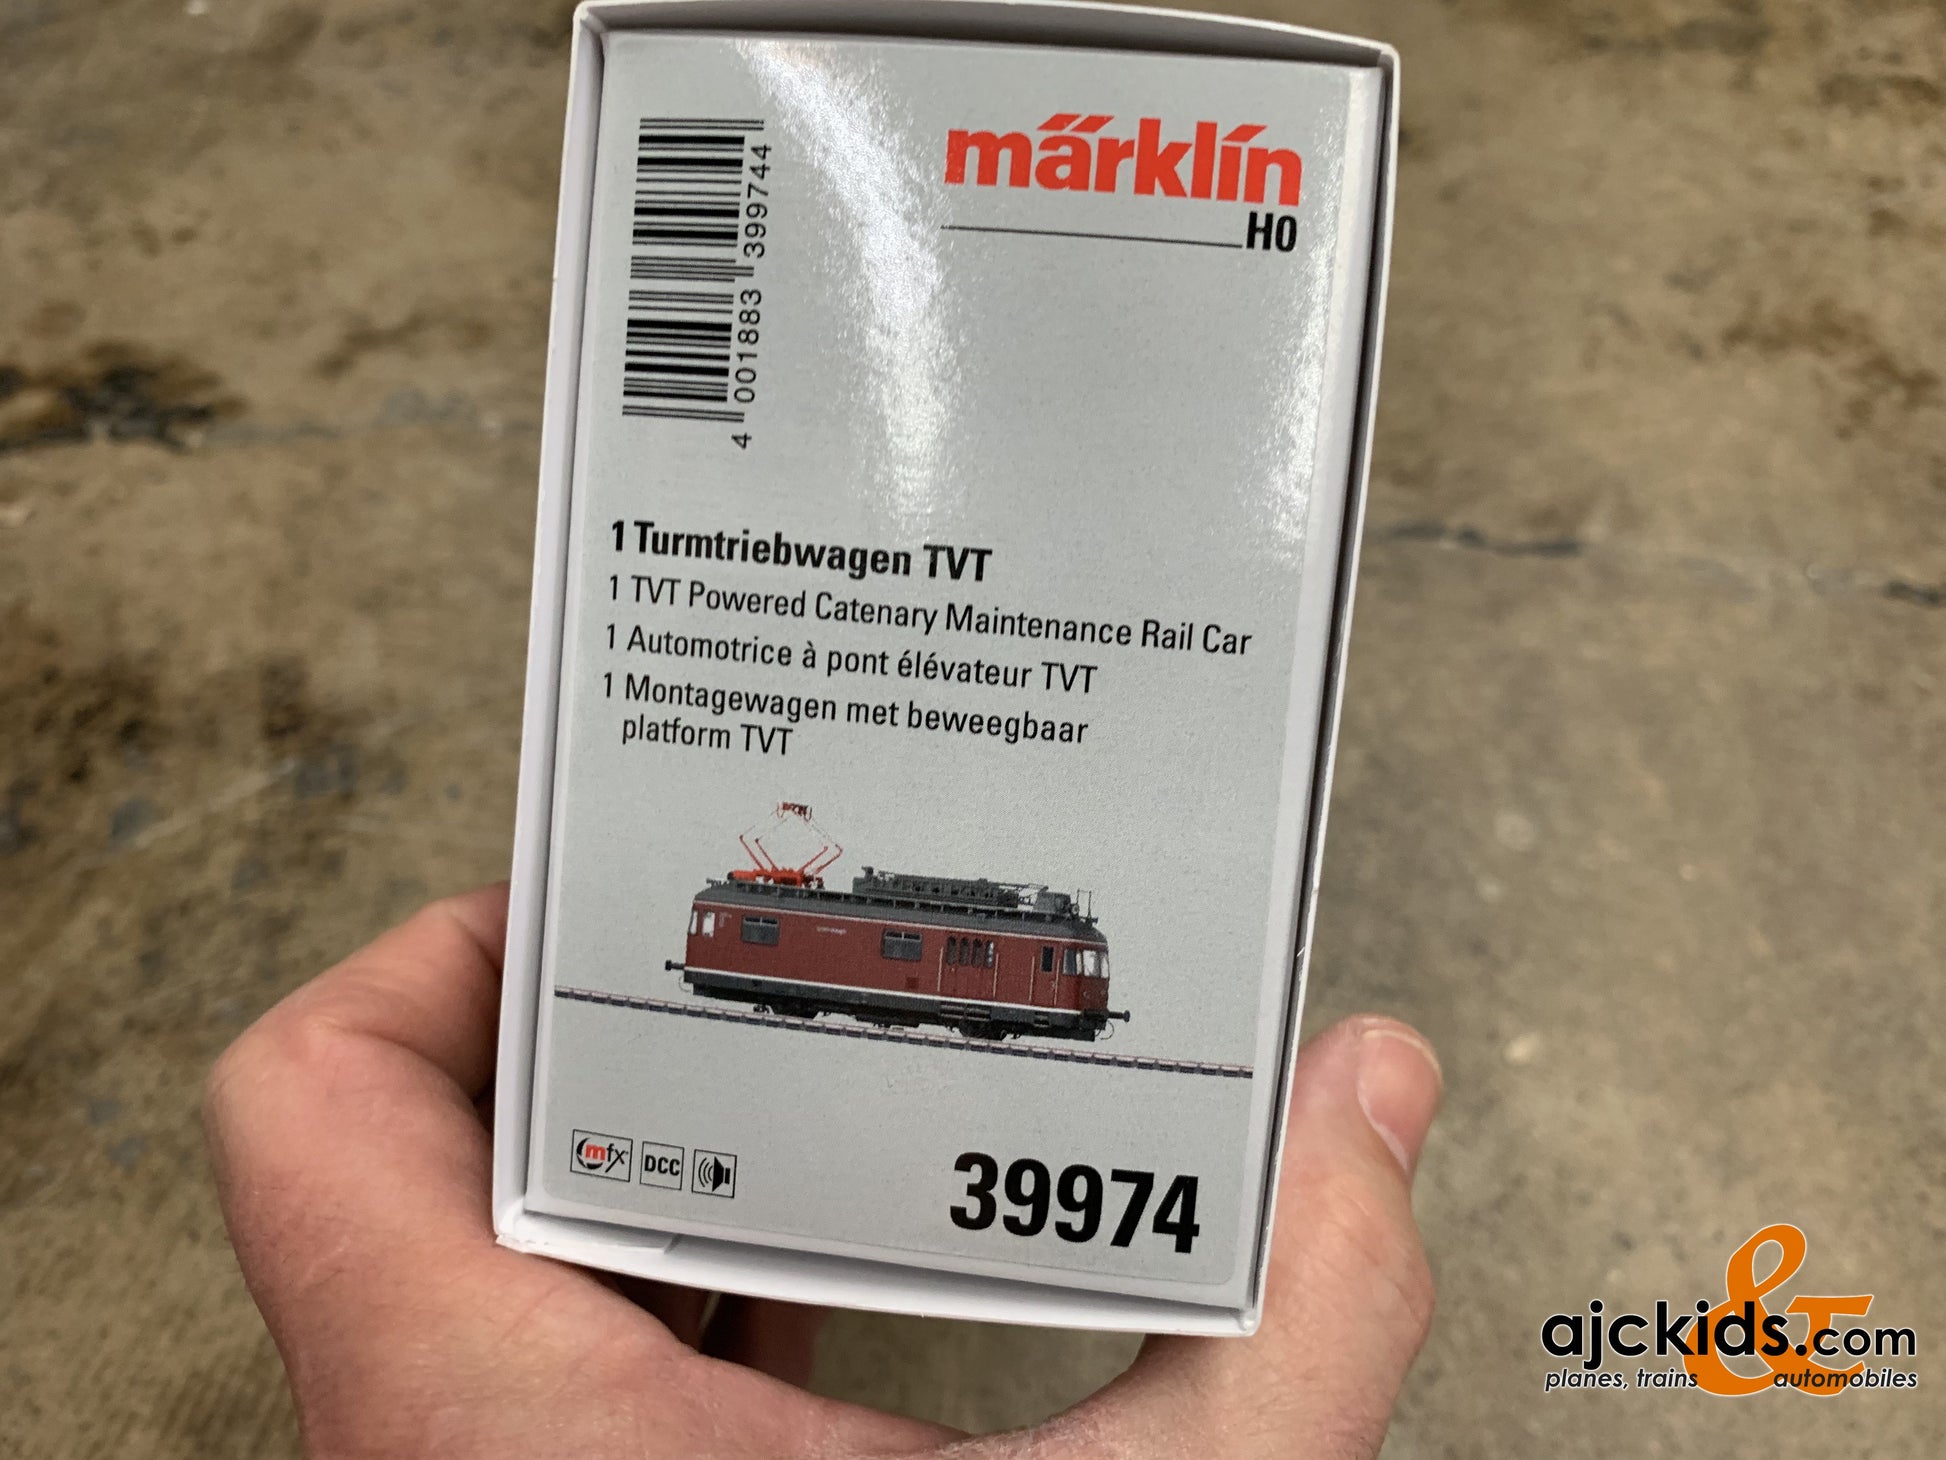 Marklin 39974 - TVT Powered Catenary Maintenance Rail Car